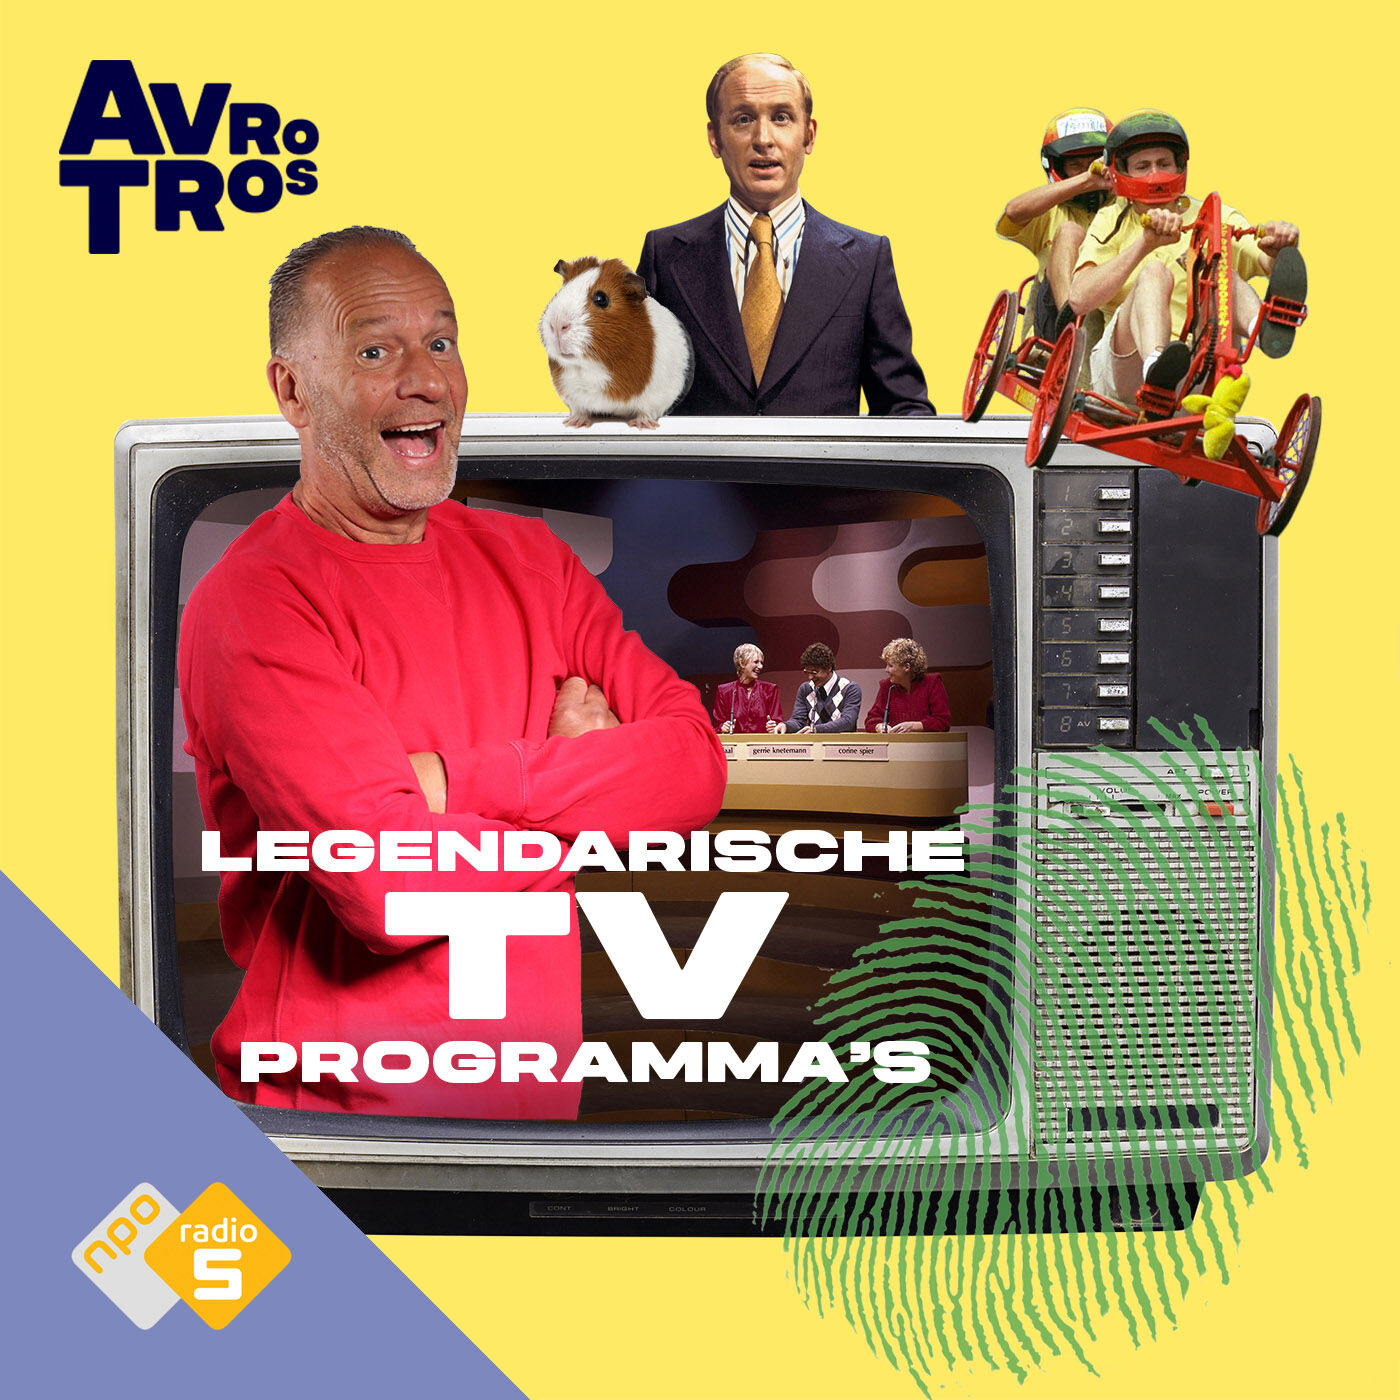 Legendarische TV-programma's logo